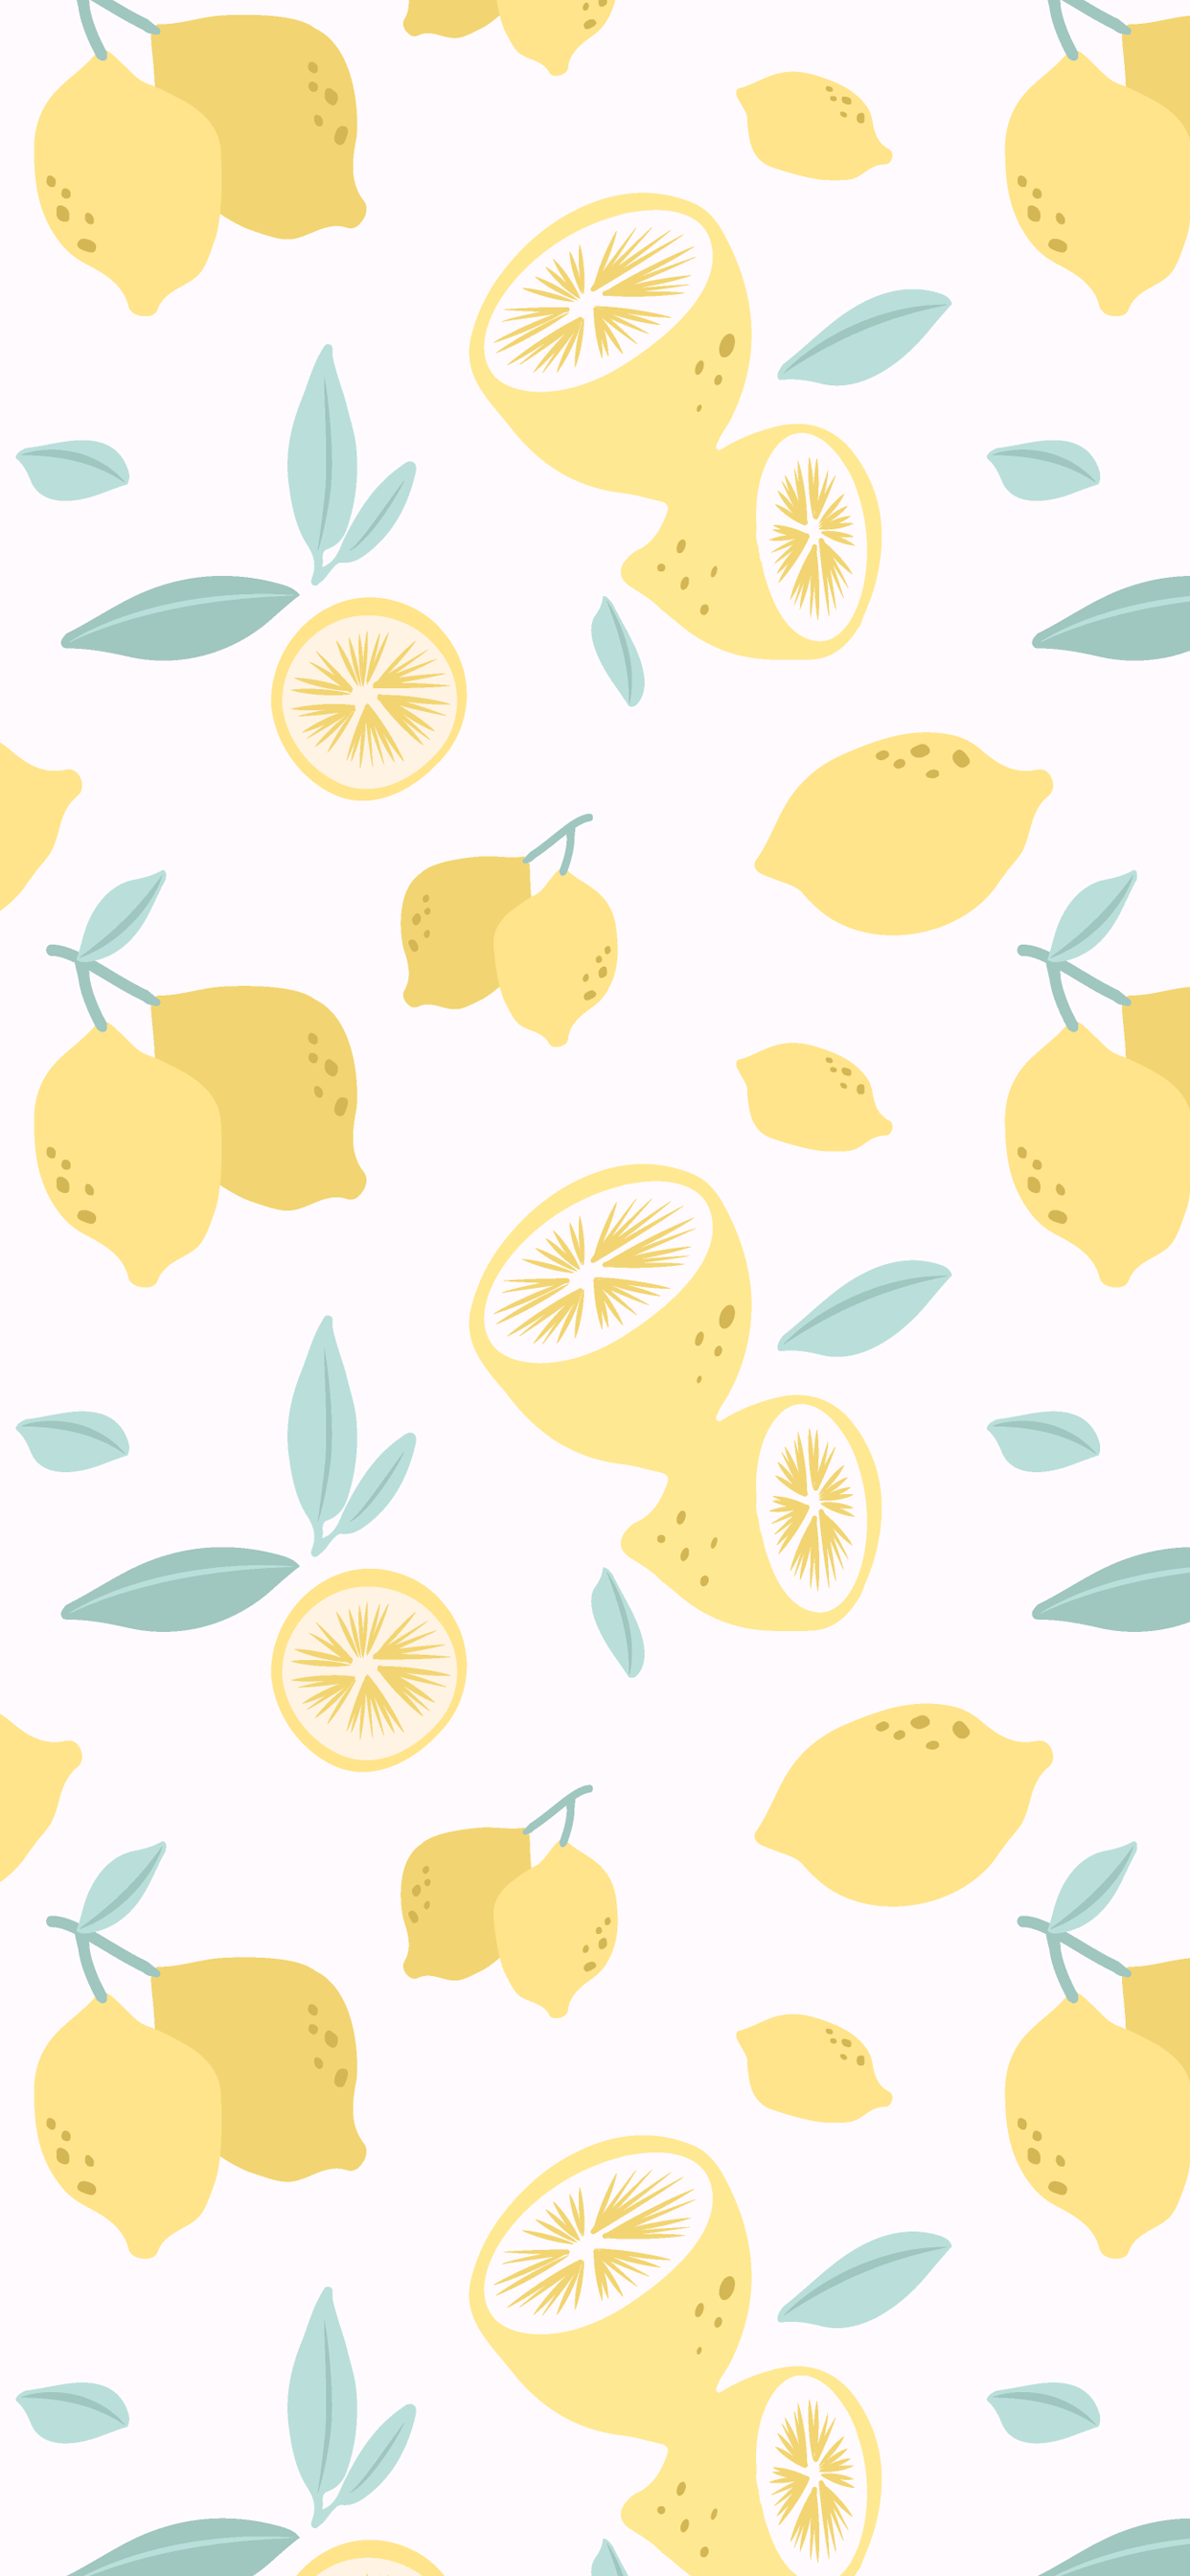 Lemons iPhone Wallpaper. Simple iphone wallpaper, Cute summer wallpaper, iPhone wallpaper pattern